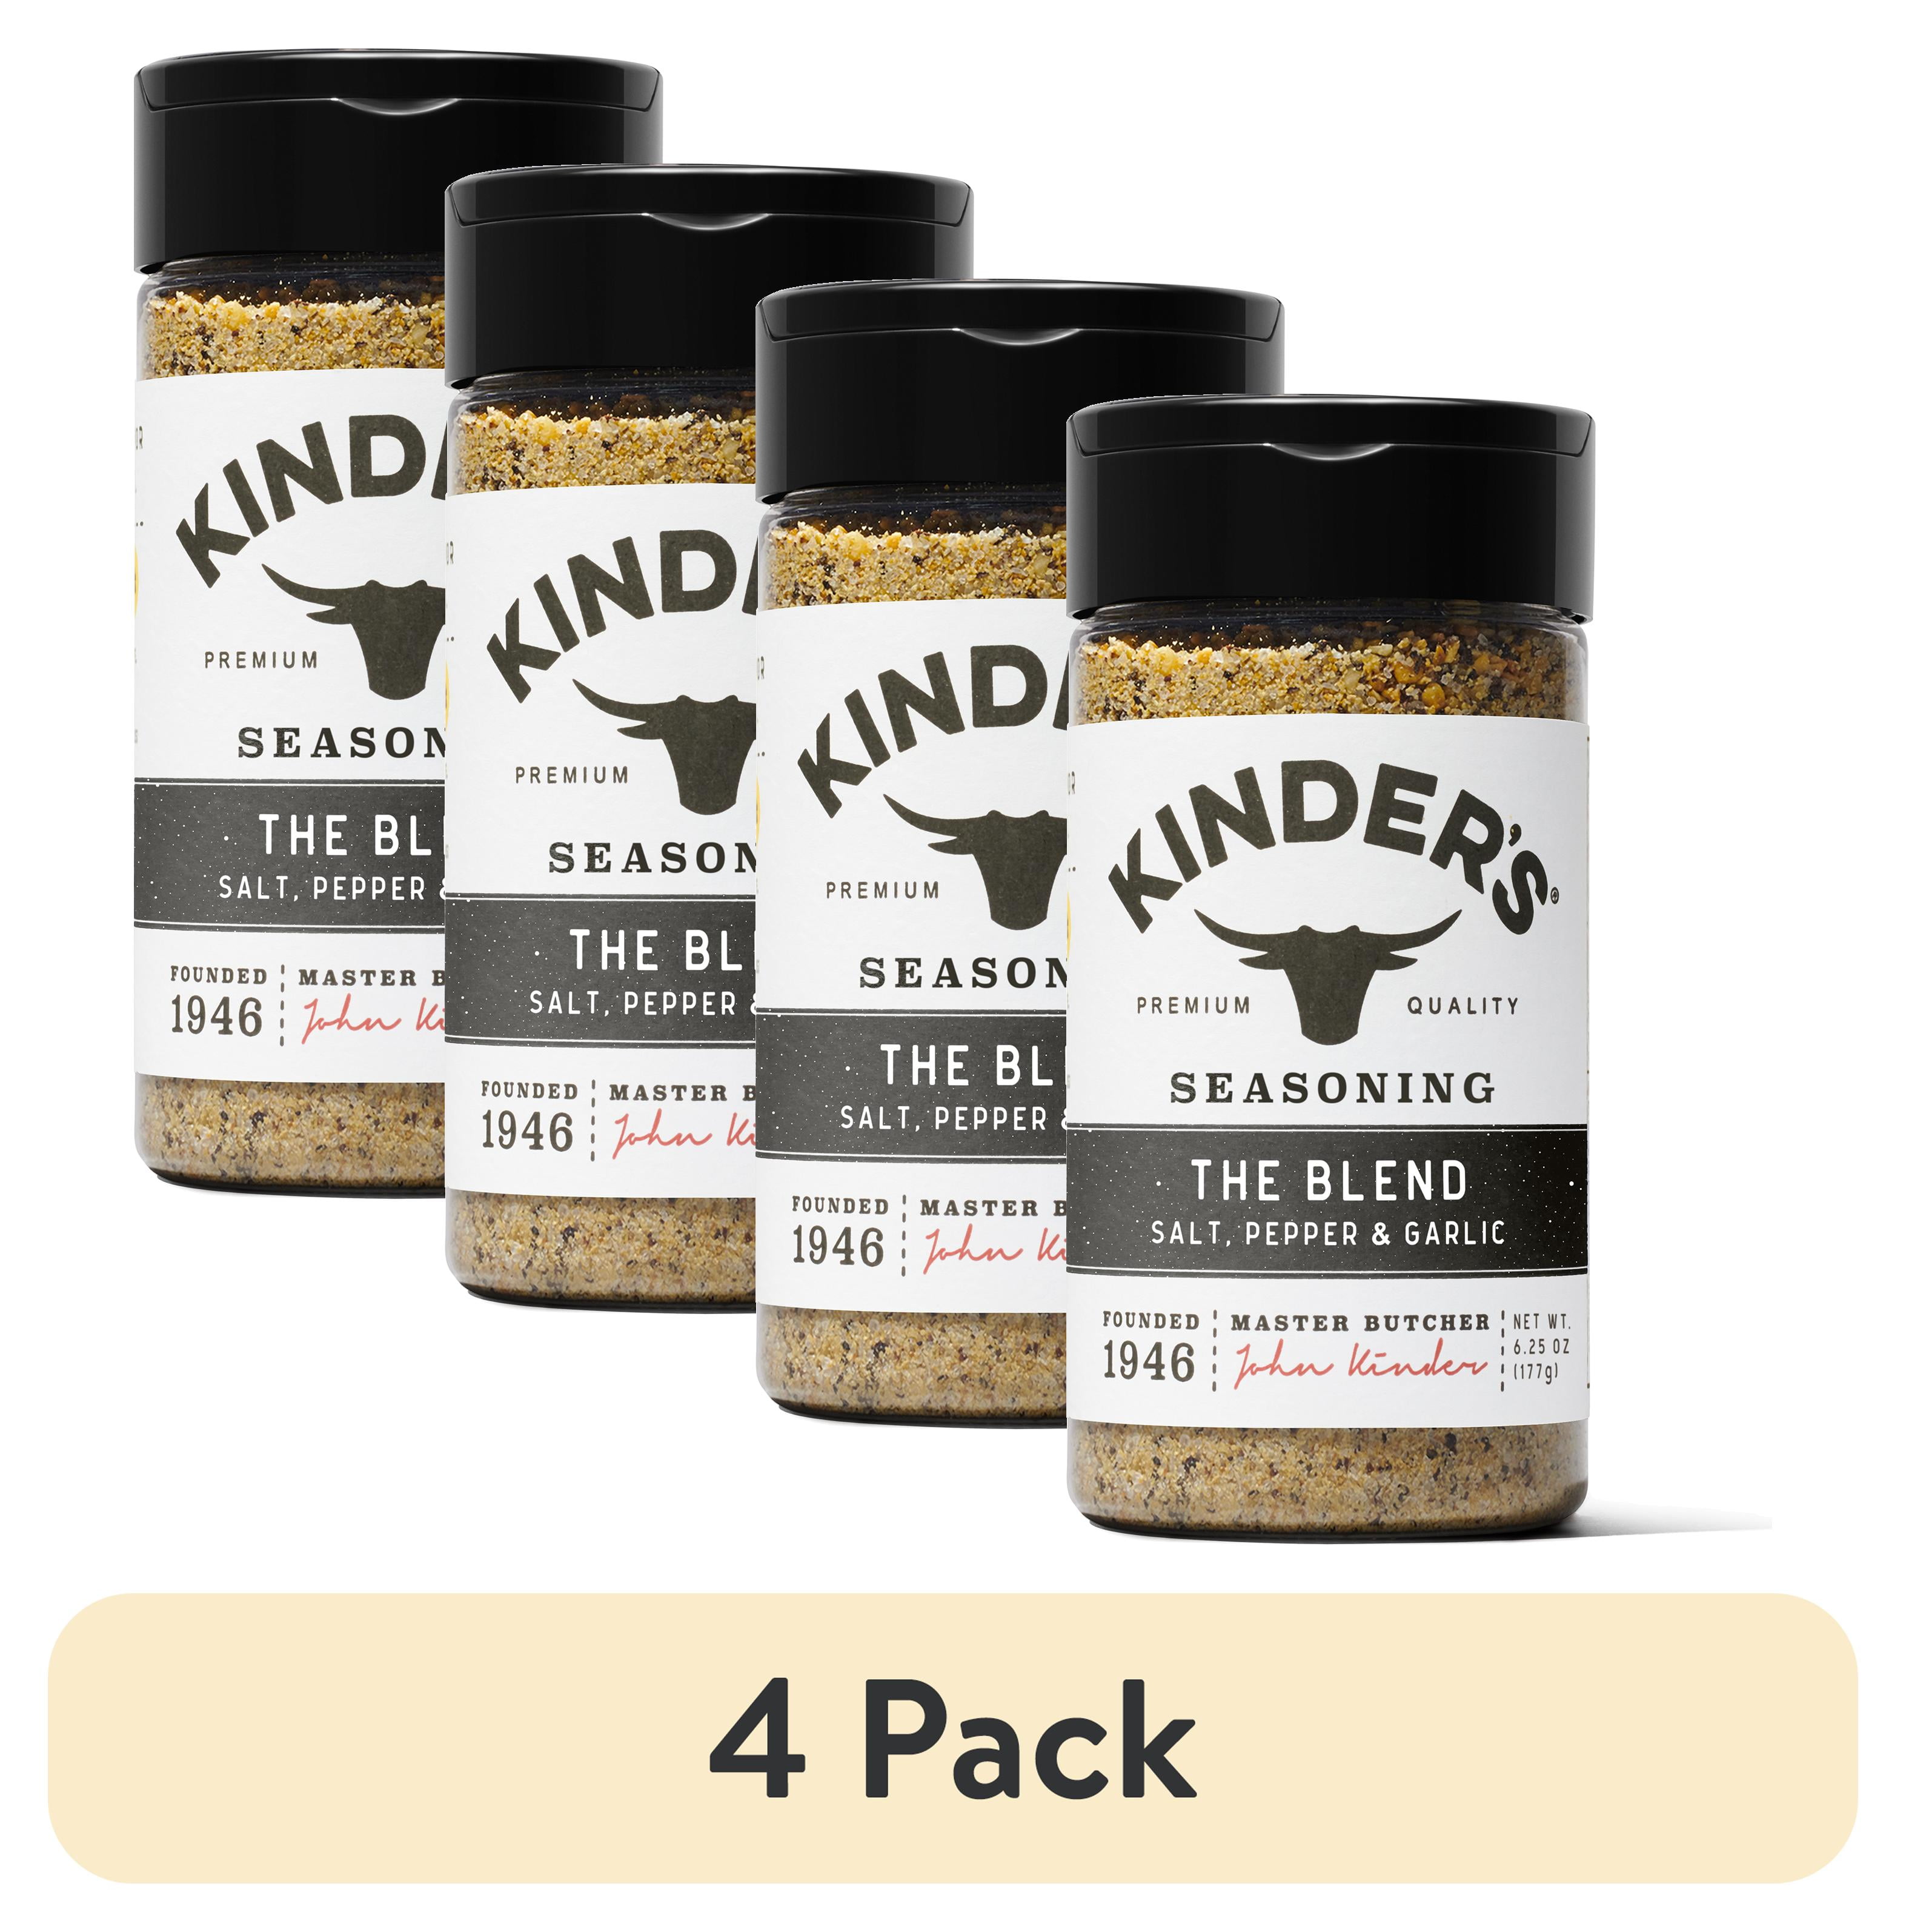 (4 pack) Kinder's The Blend Seasoning with Salt, Pepper and Garlic, 6.25oz